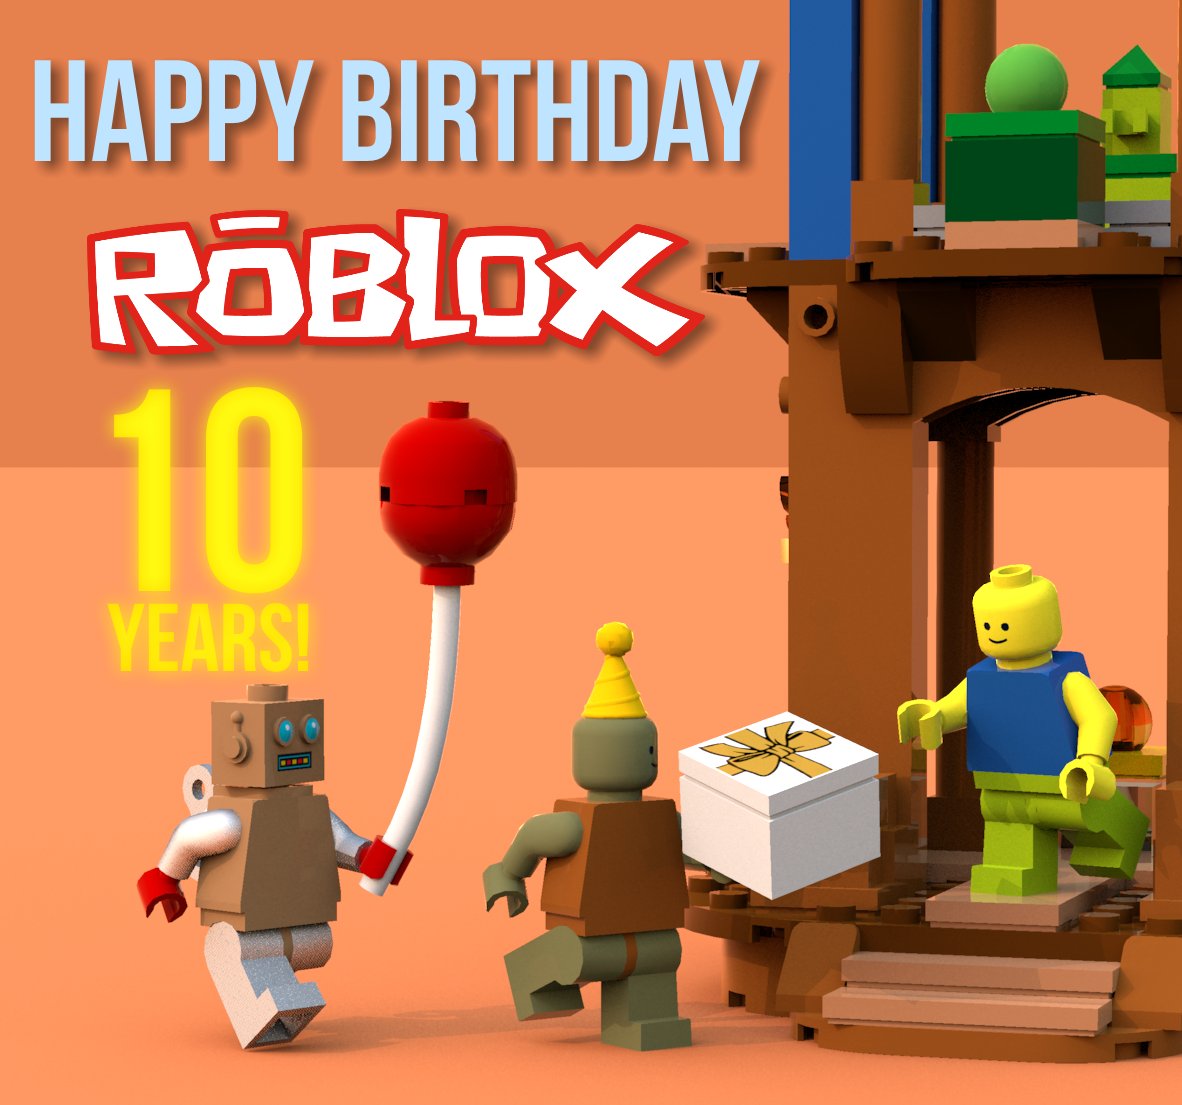 Kal Dragon On Twitter Happy 10th Birthday Roblox Https T Co Jyqipreret - happy 10th birthday roblox